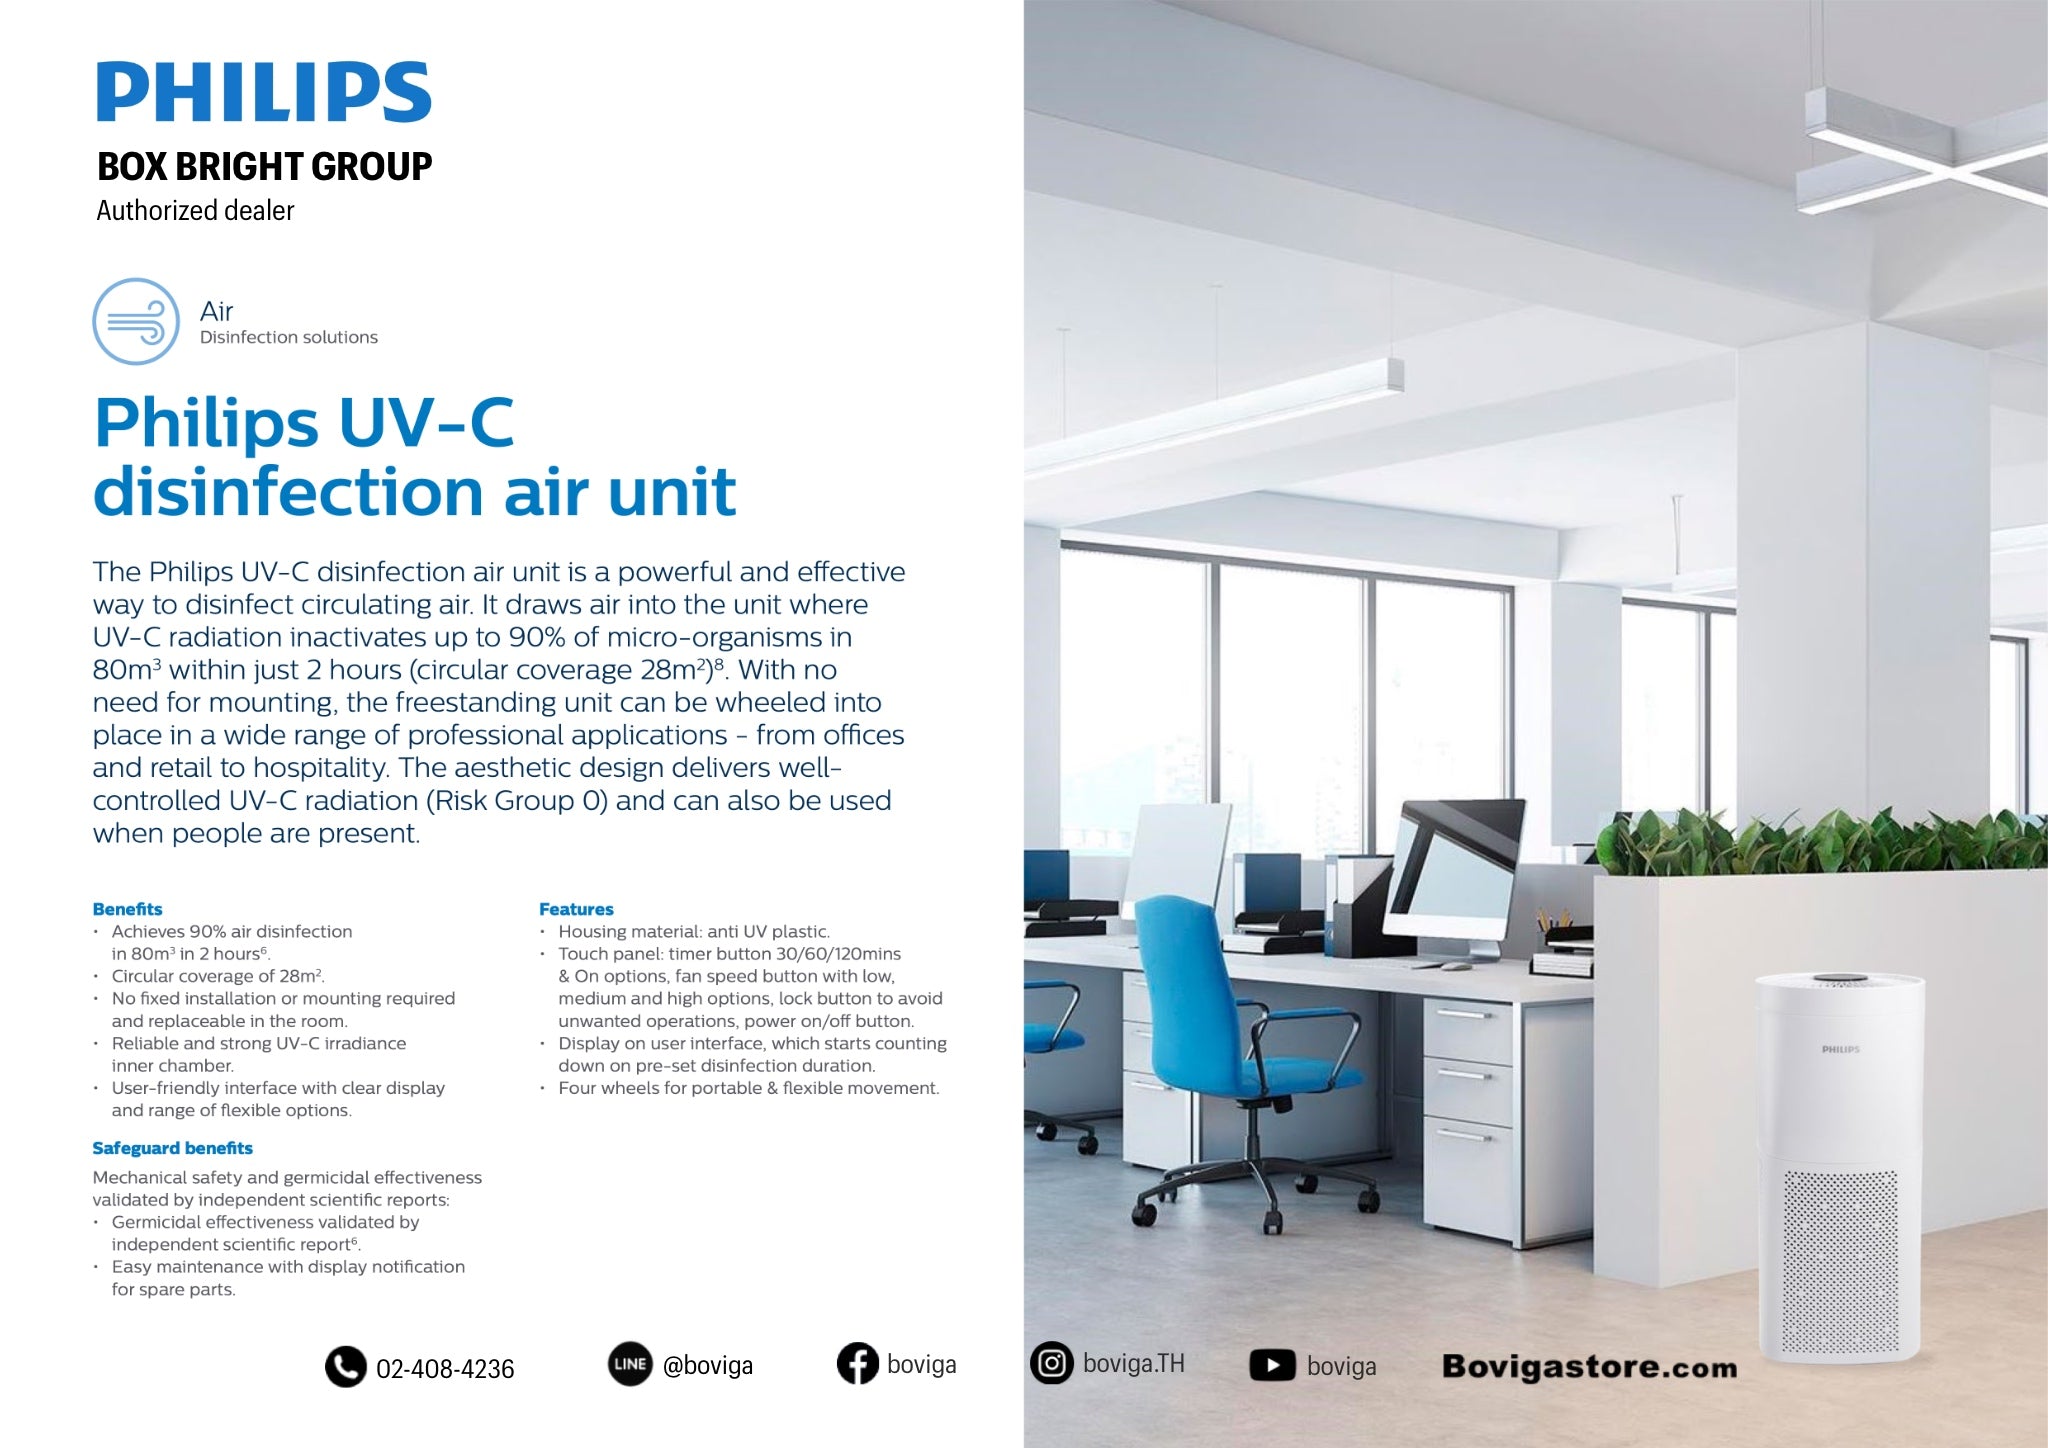 Philips UV-C disinfection air unit purifier เครื่องยับยั้งเชื้อโรค ฆ่าเชื้อโรค ด้วยอากาศ